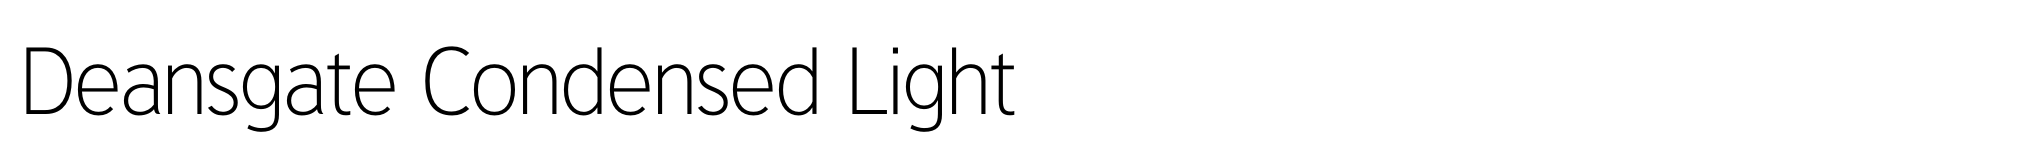 Deansgate Condensed Light image